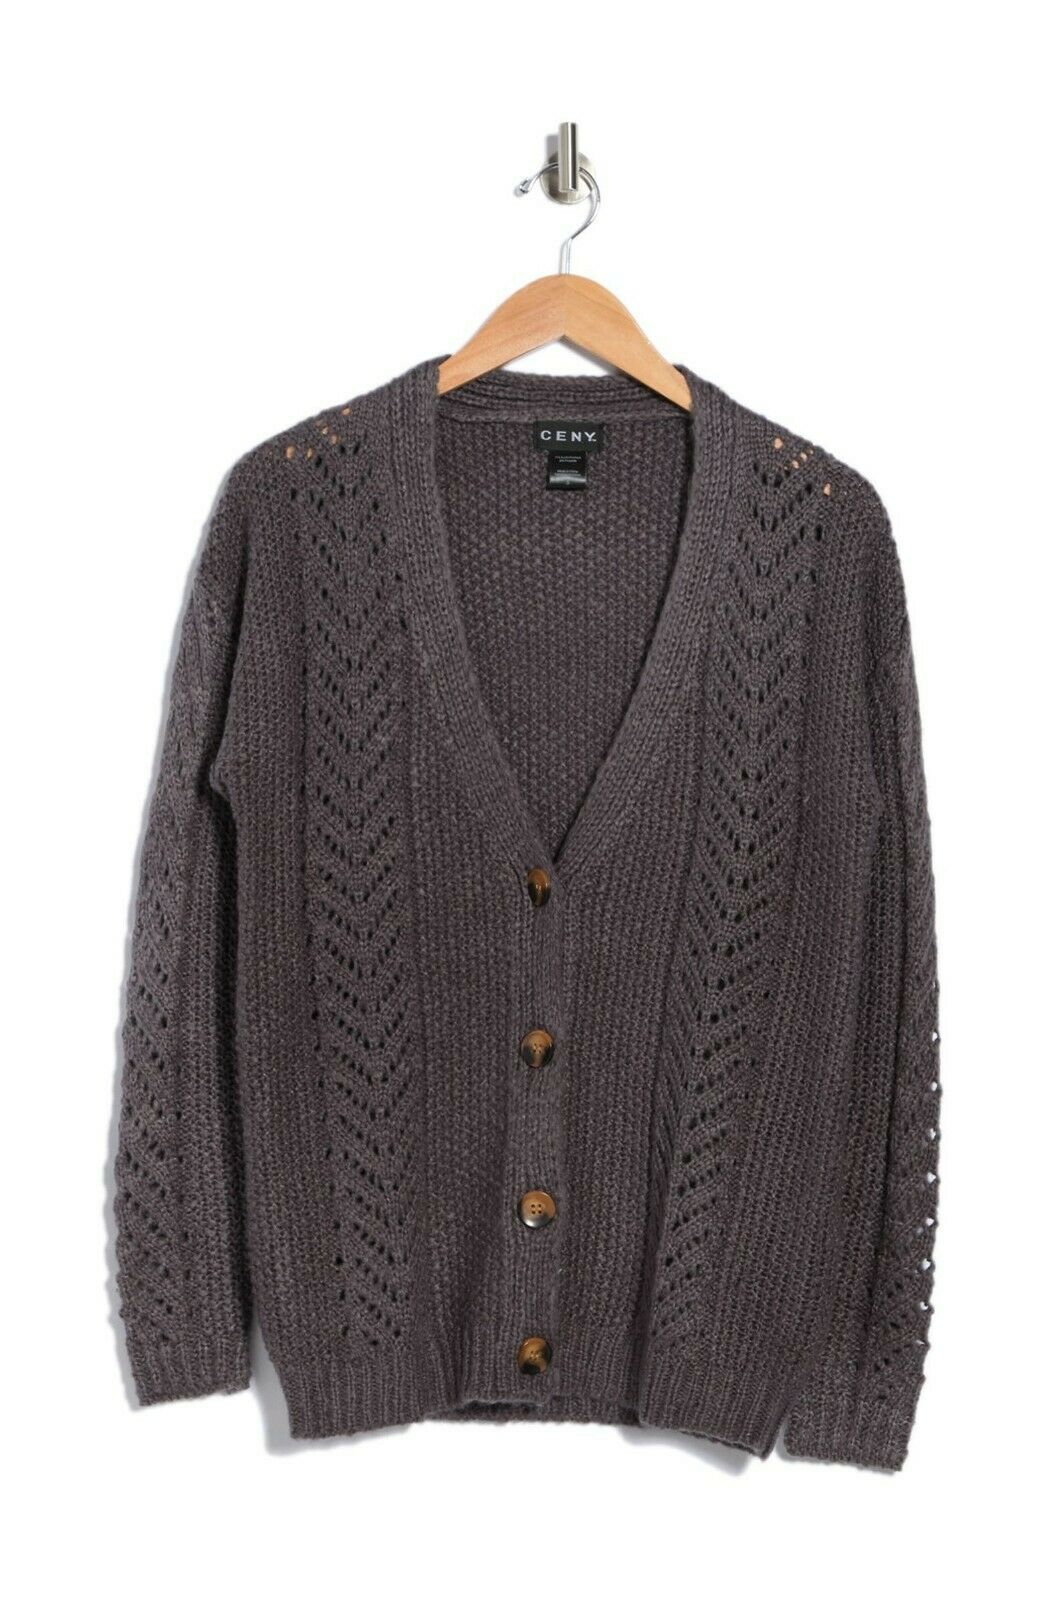 CENY Mix Cable Grandpa Knit Cardigan Sweater size XS Dark Charcoal Gray